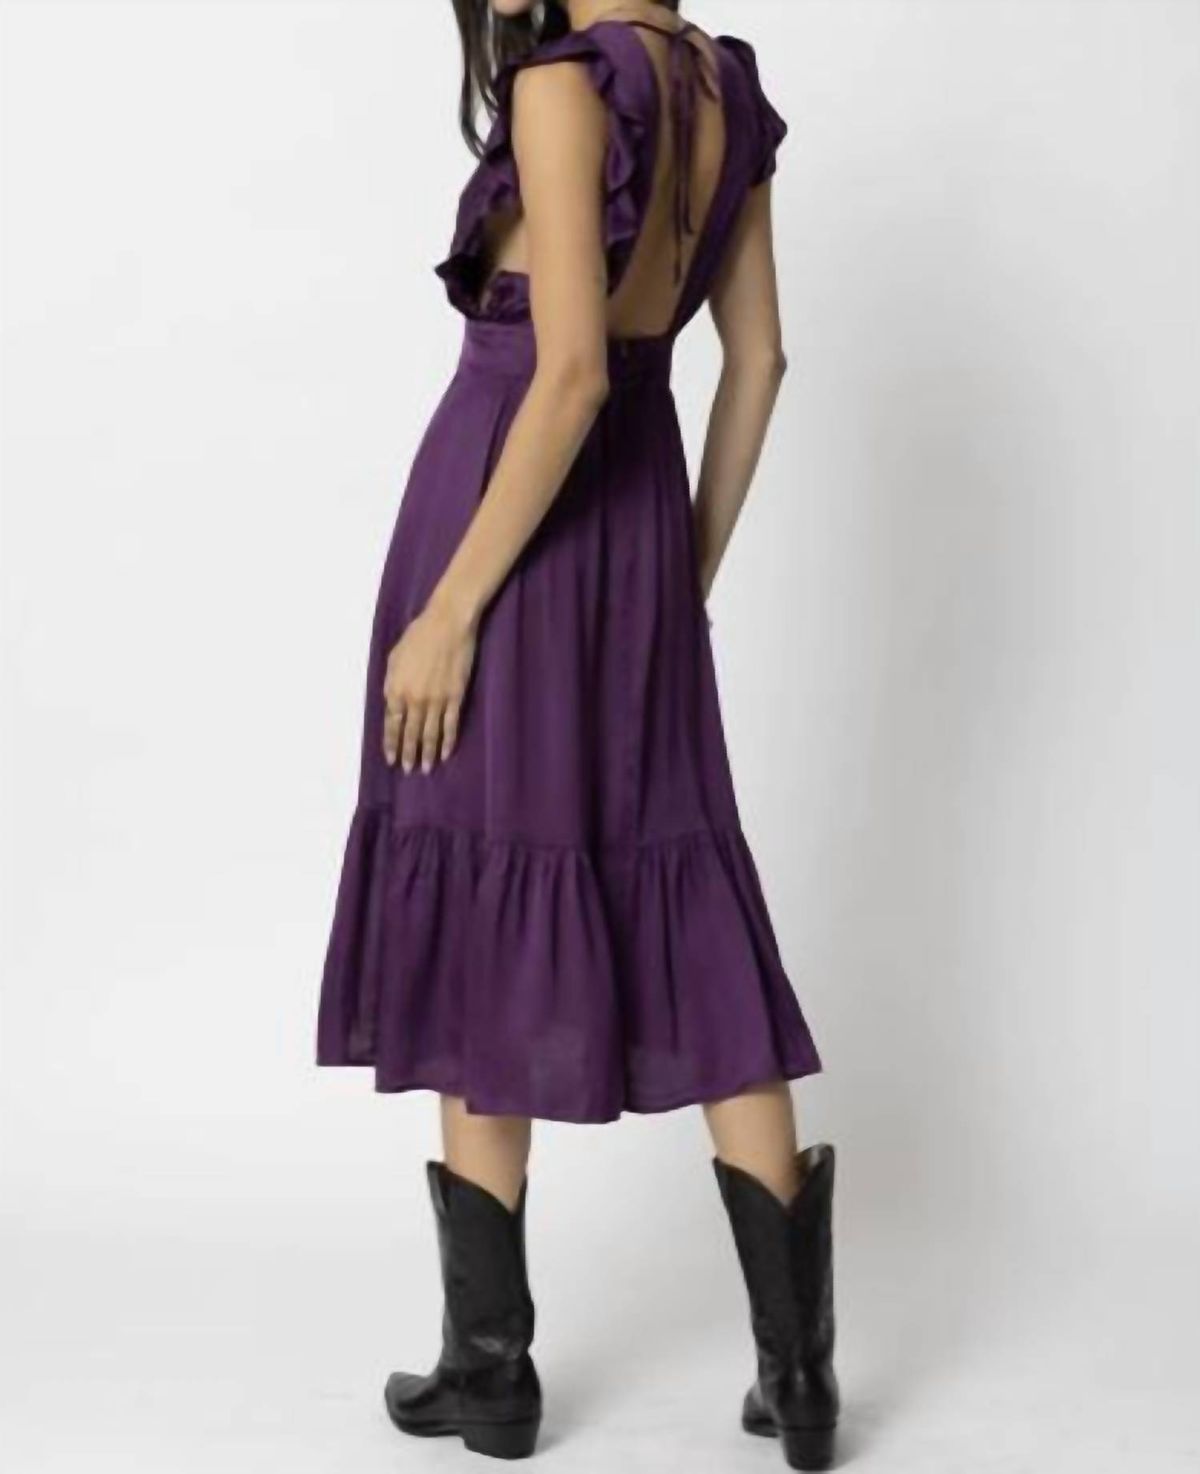 Style 1-3984669235-3471 Stillwater Size S Plunge Purple Cocktail Dress on Queenly